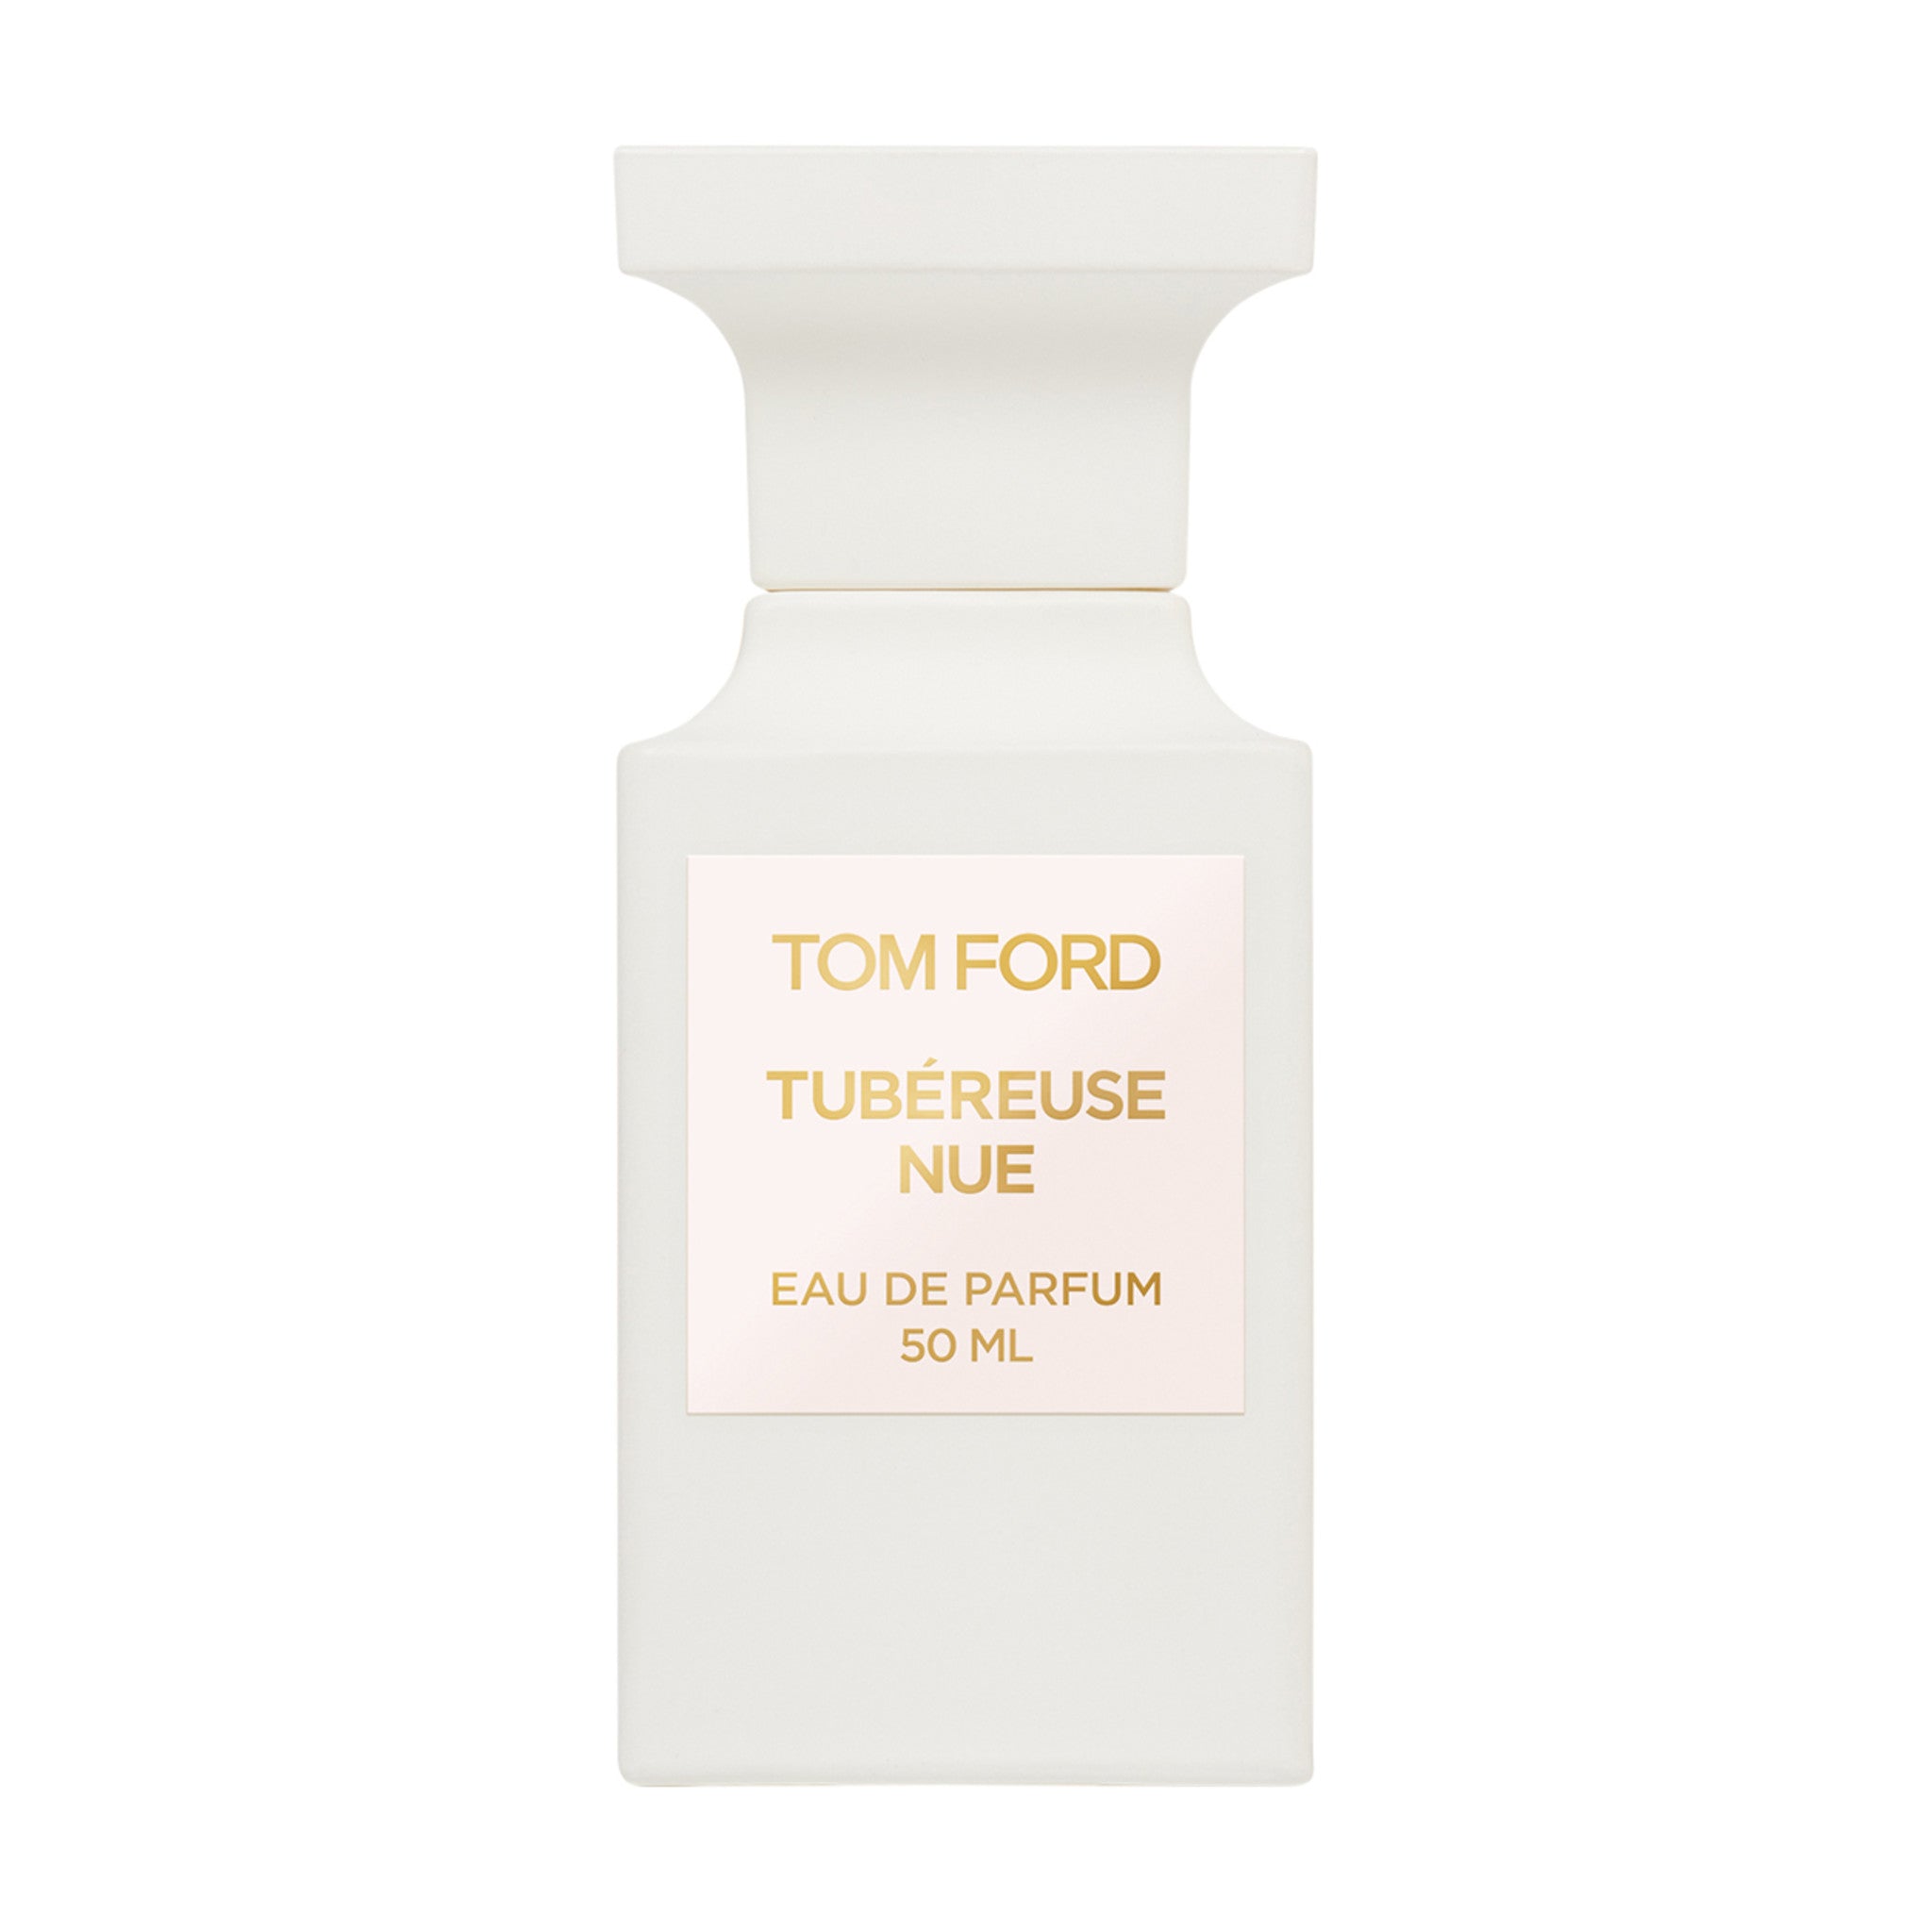 Tom Ford Tubéreuse Nue Size variant: 1.7 fl oz | 50 ml main image.